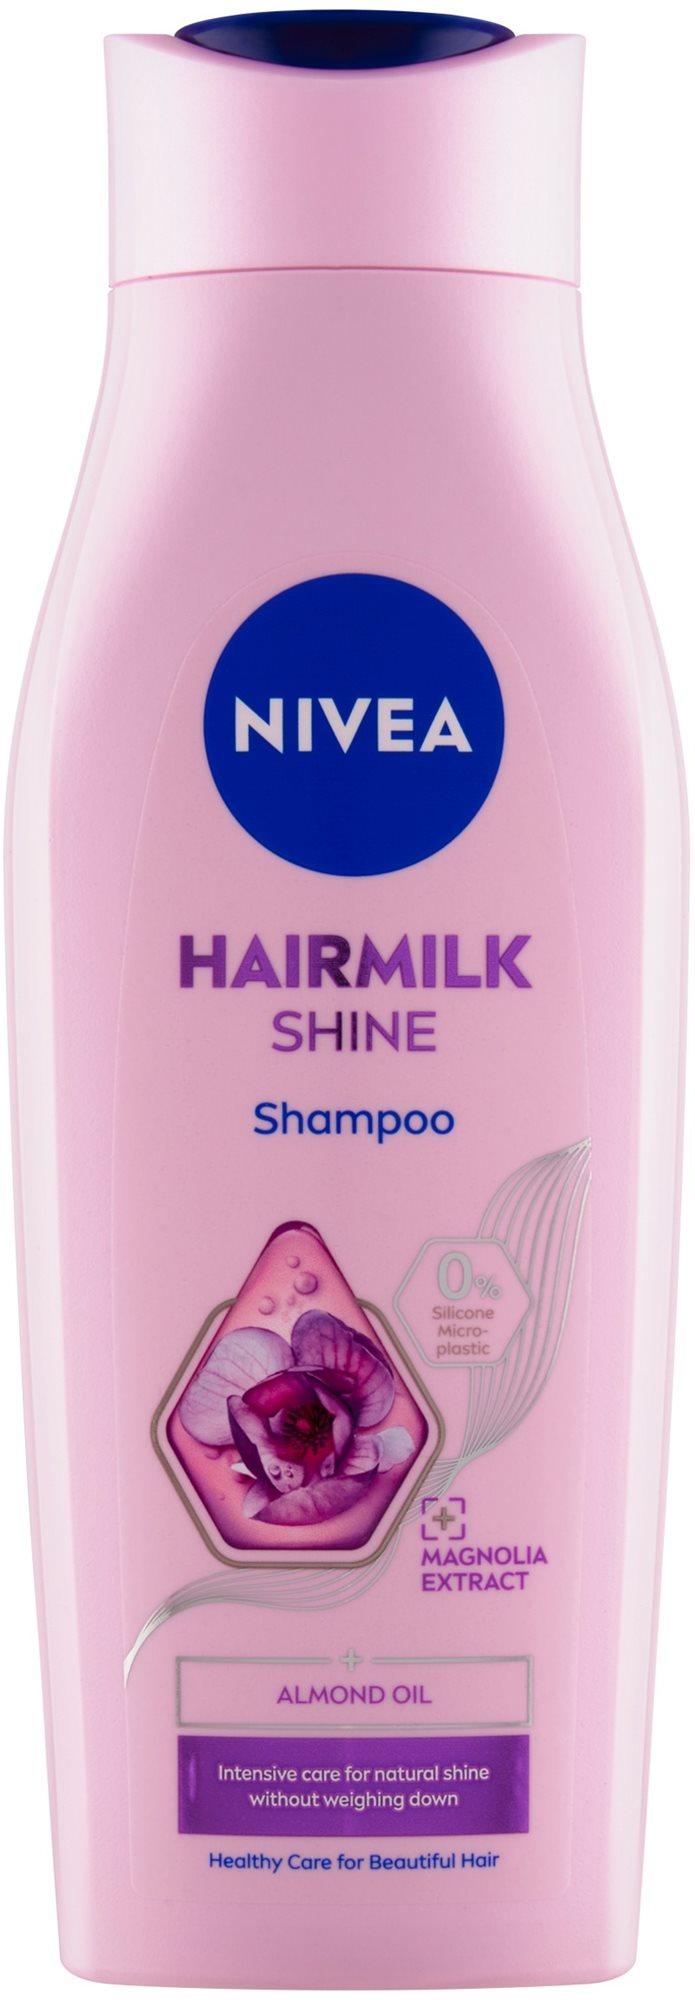 NIVEA Hairmilk Shine Shampoo 400 ml